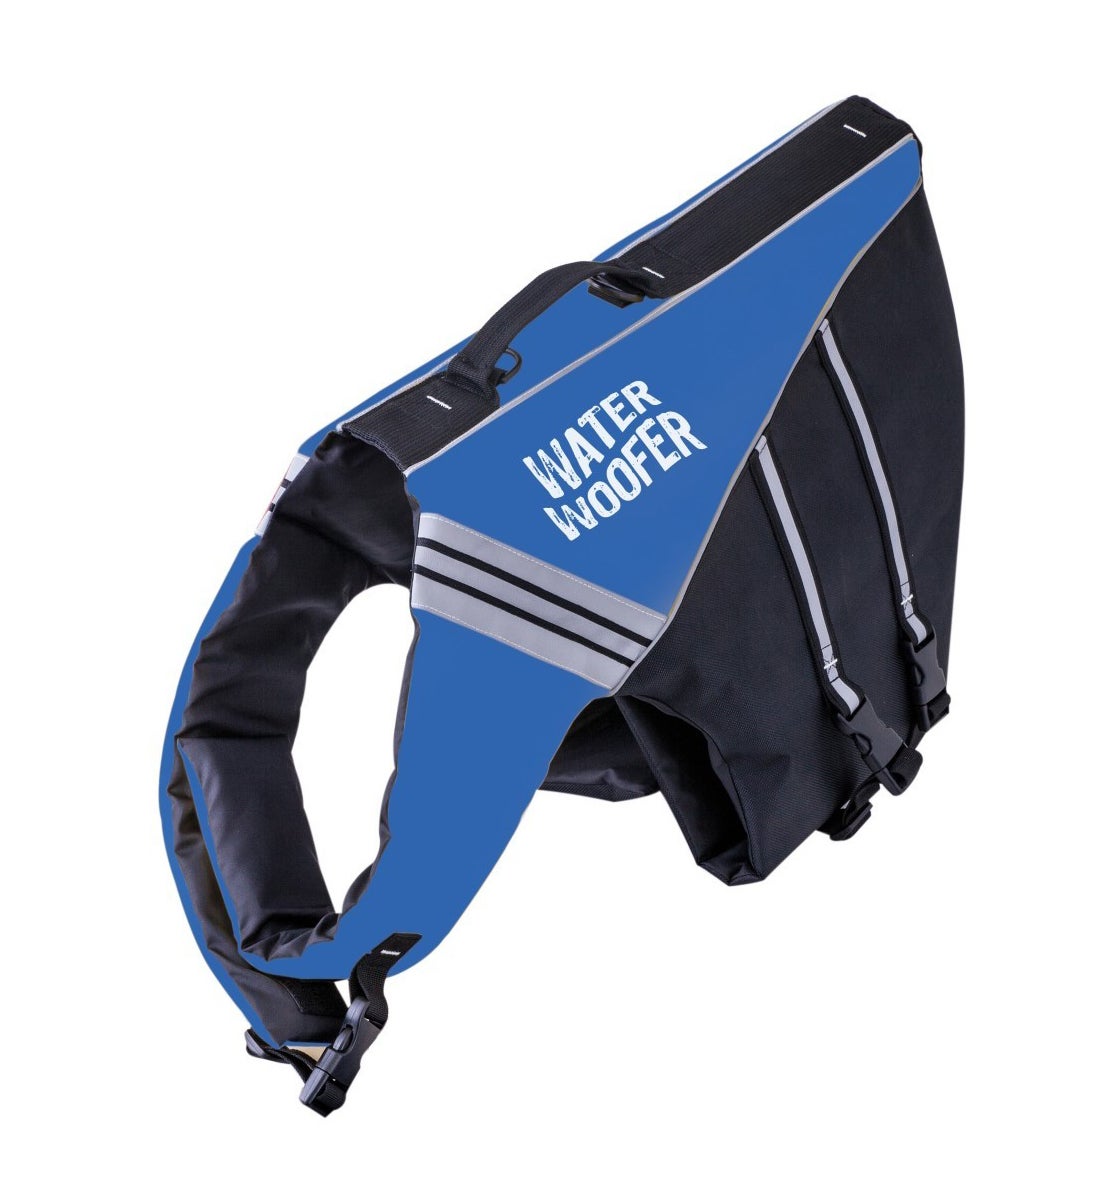 Water Woofer Dog Life Jacket - Blue and Black Dog Floatation Device - DFD